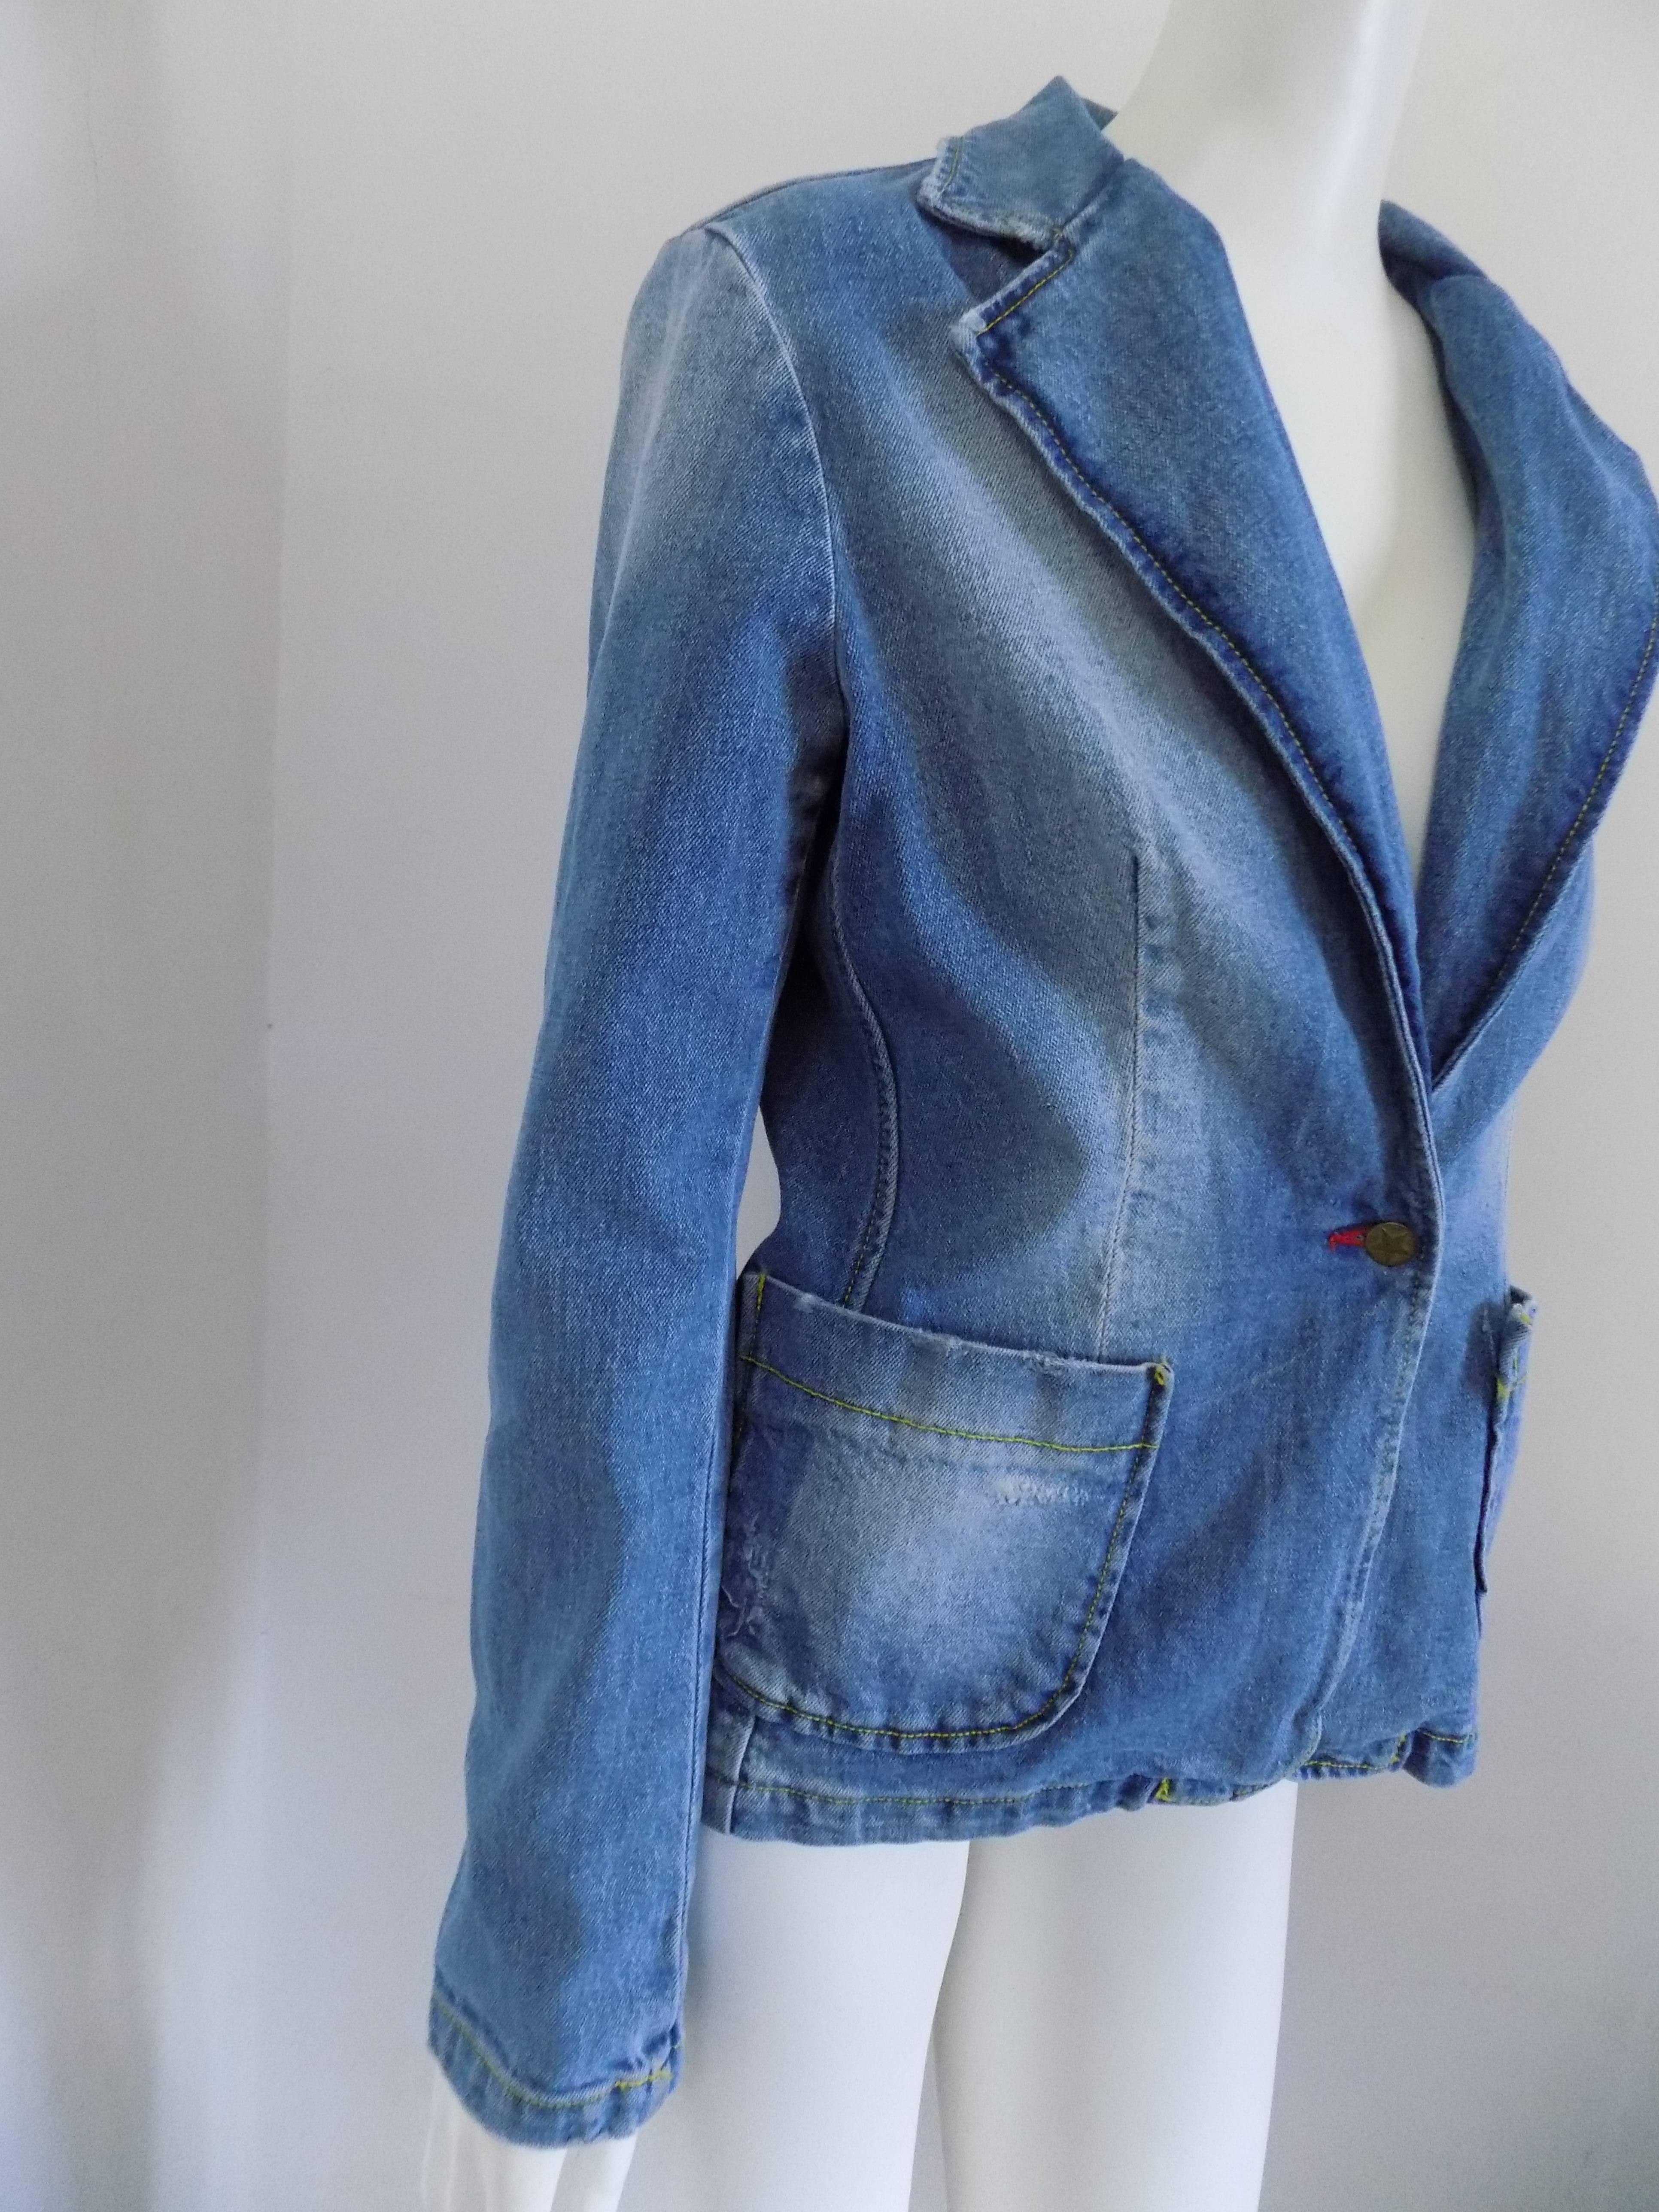 Jo Kang limited edition cotton denim jacket
size s 
